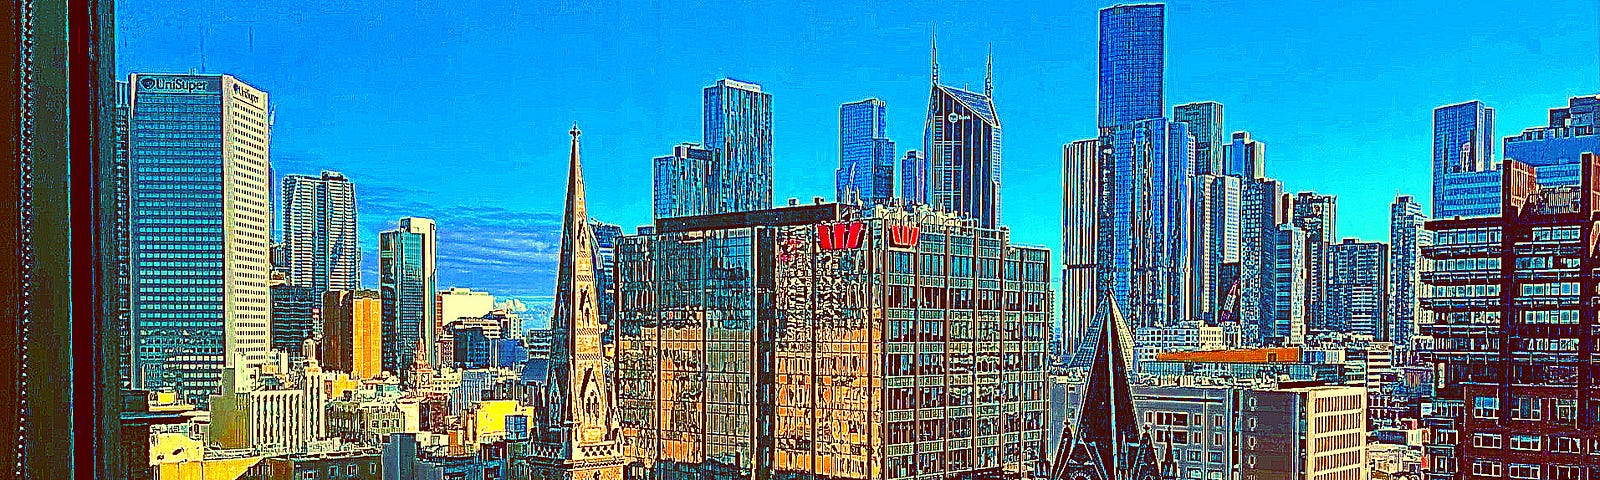 A digitally, colour-enhanced image of a city skyline taken from an upper-storey window.